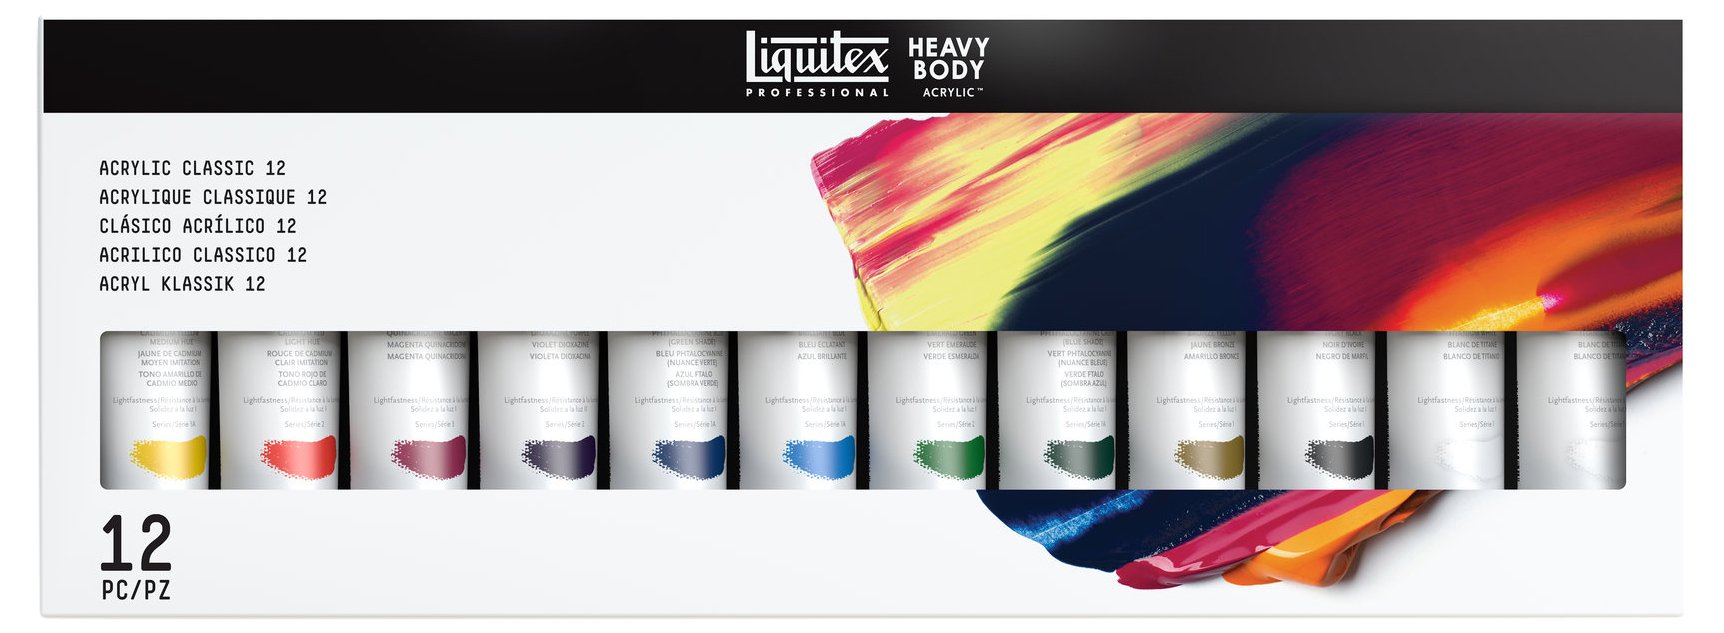 Liquitex Professional Heavy Body Acrylic Paint Classic Set, 12 Colors